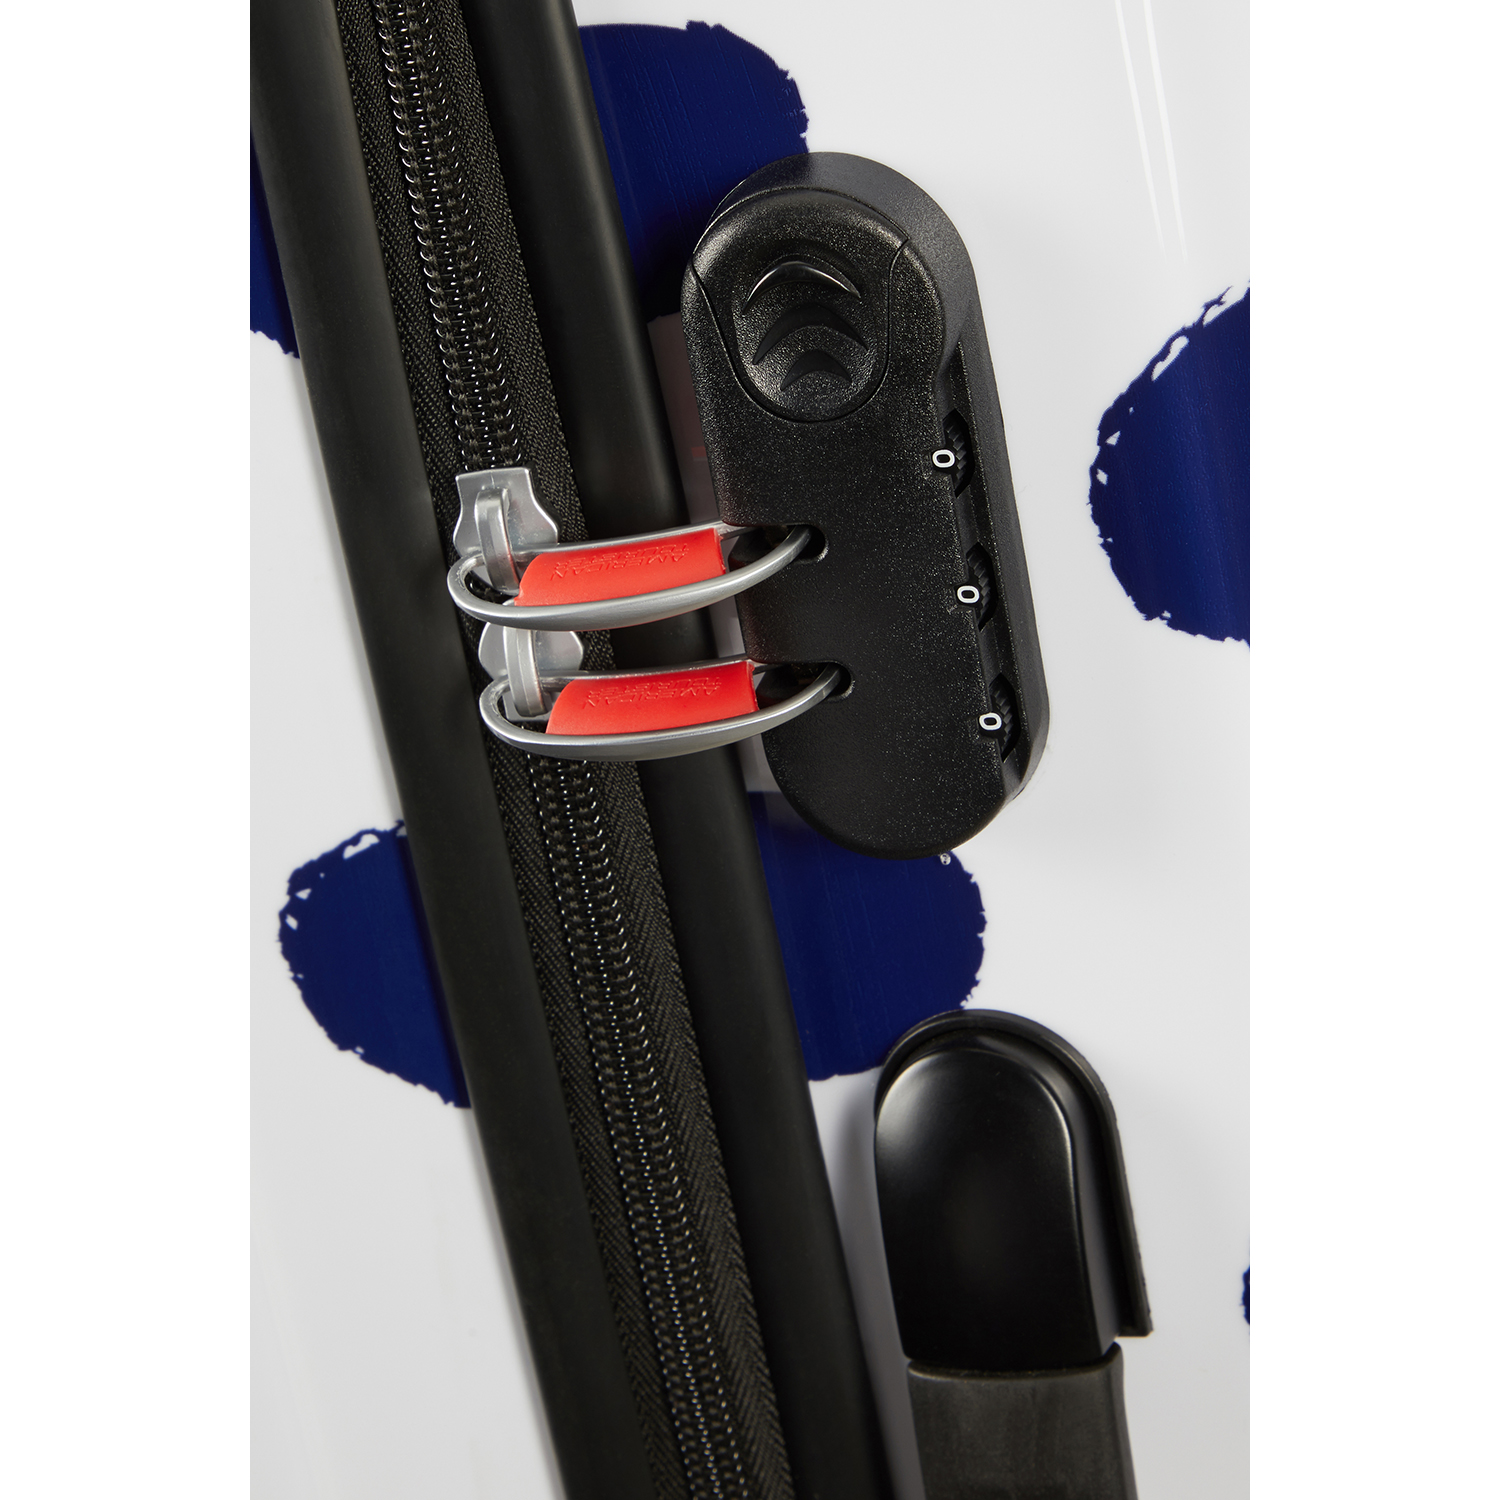 DISNEY LEGENDS-SPINNER 4 Tekerlekli Orta Boy Valiz 65cm S19C-007-SF000*31